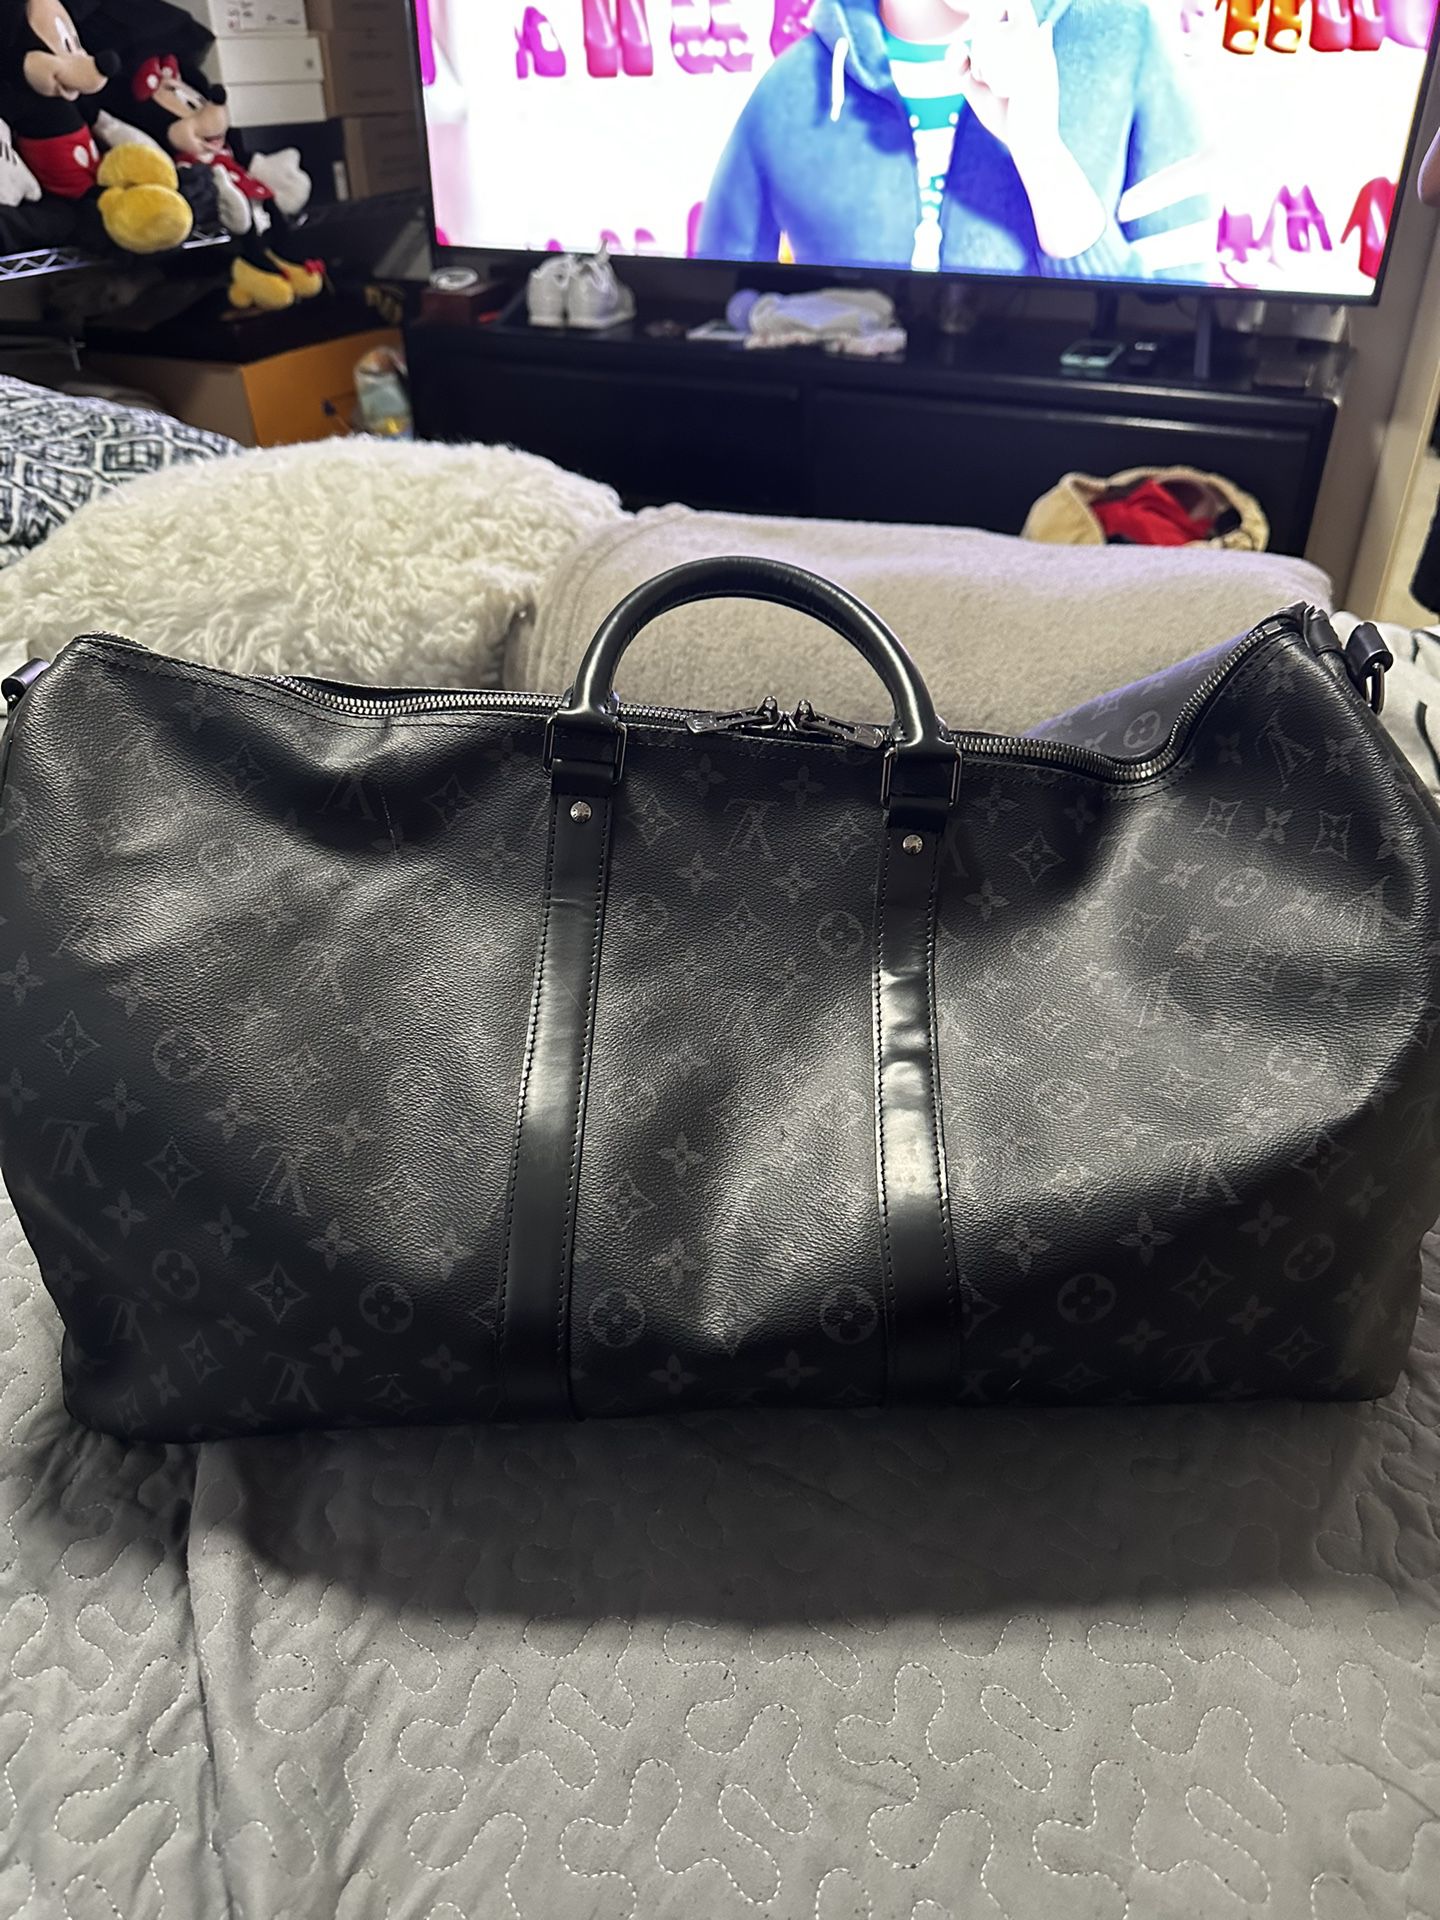 Kate Spade Black Large Bag for Sale in Miami, FL - OfferUp